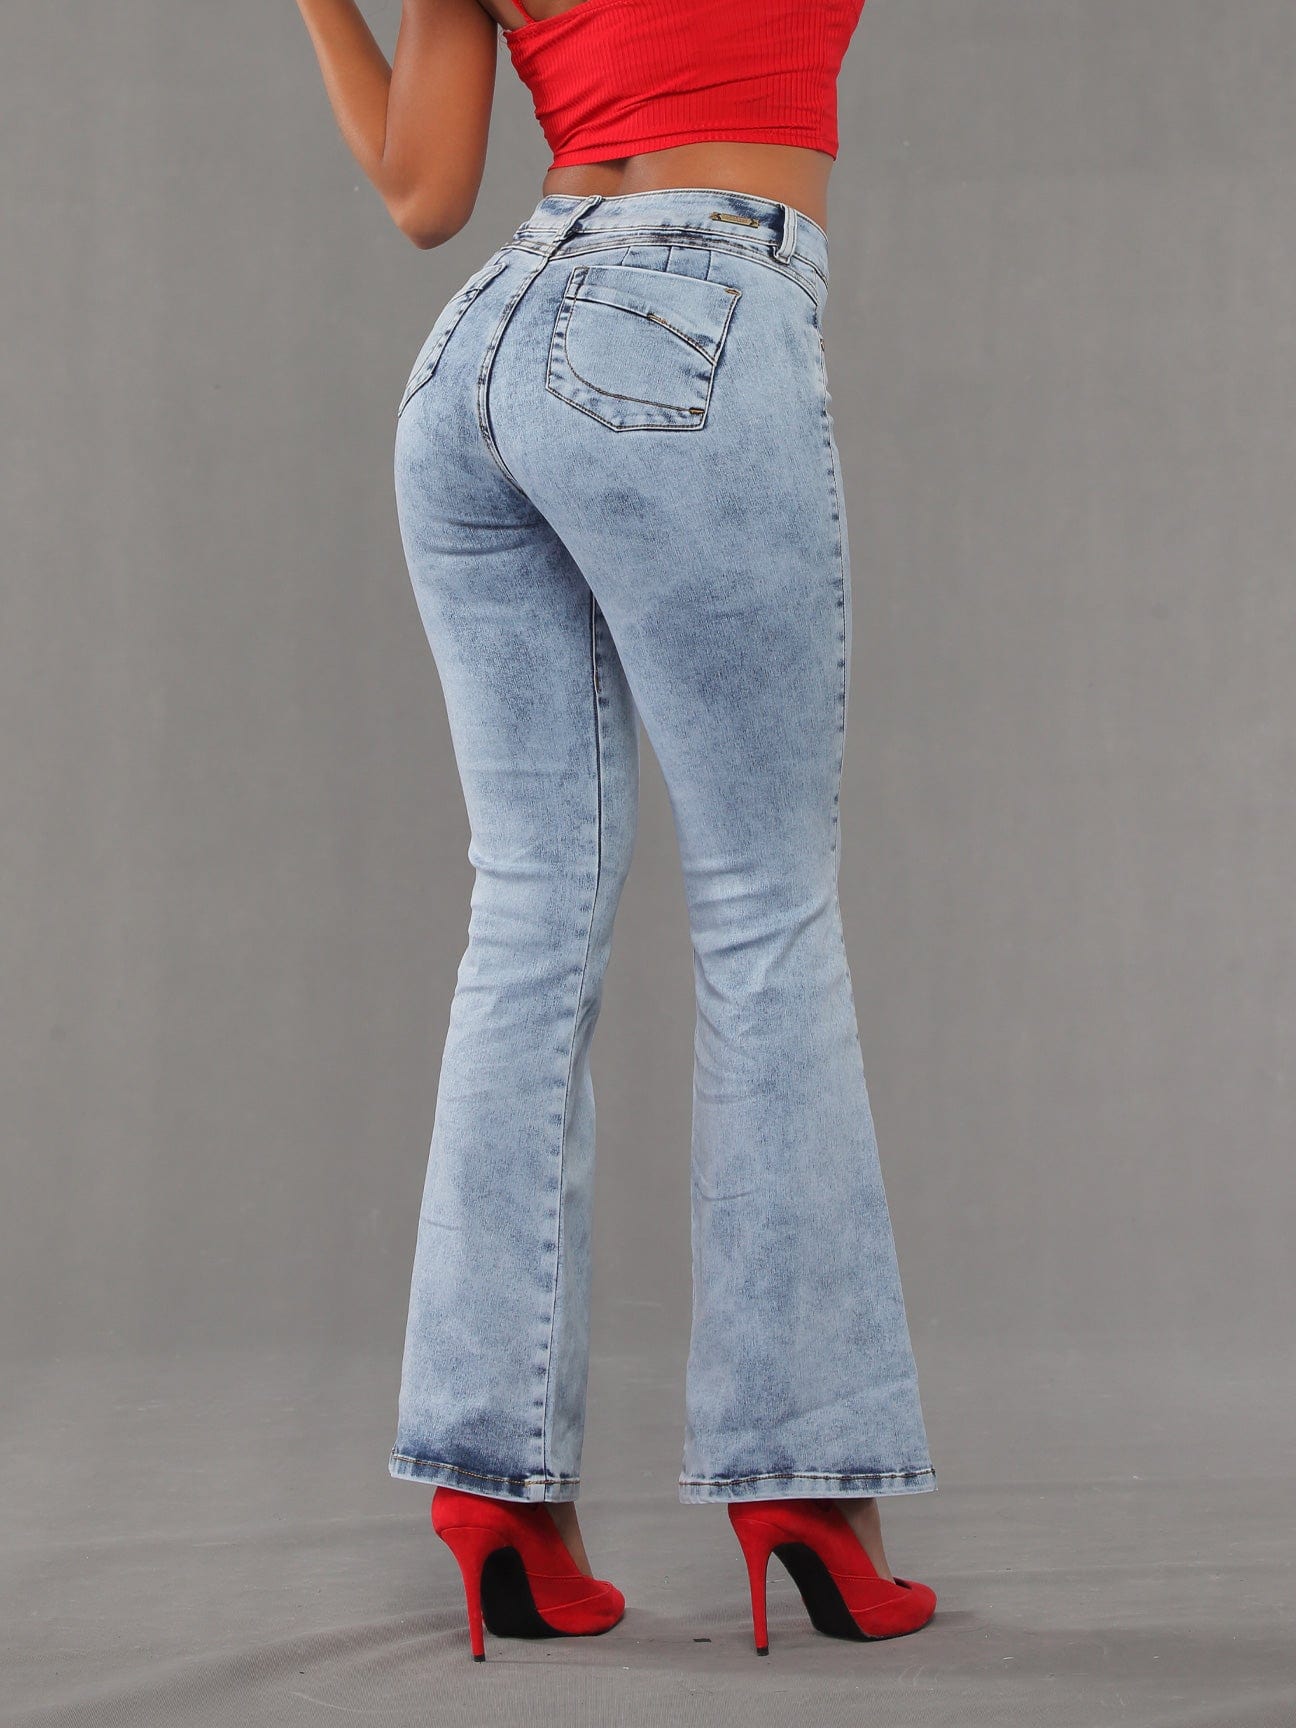 Booty Lifting High Waist Jeans (Medium Wash)- FINAL SALE - ShopperBoard